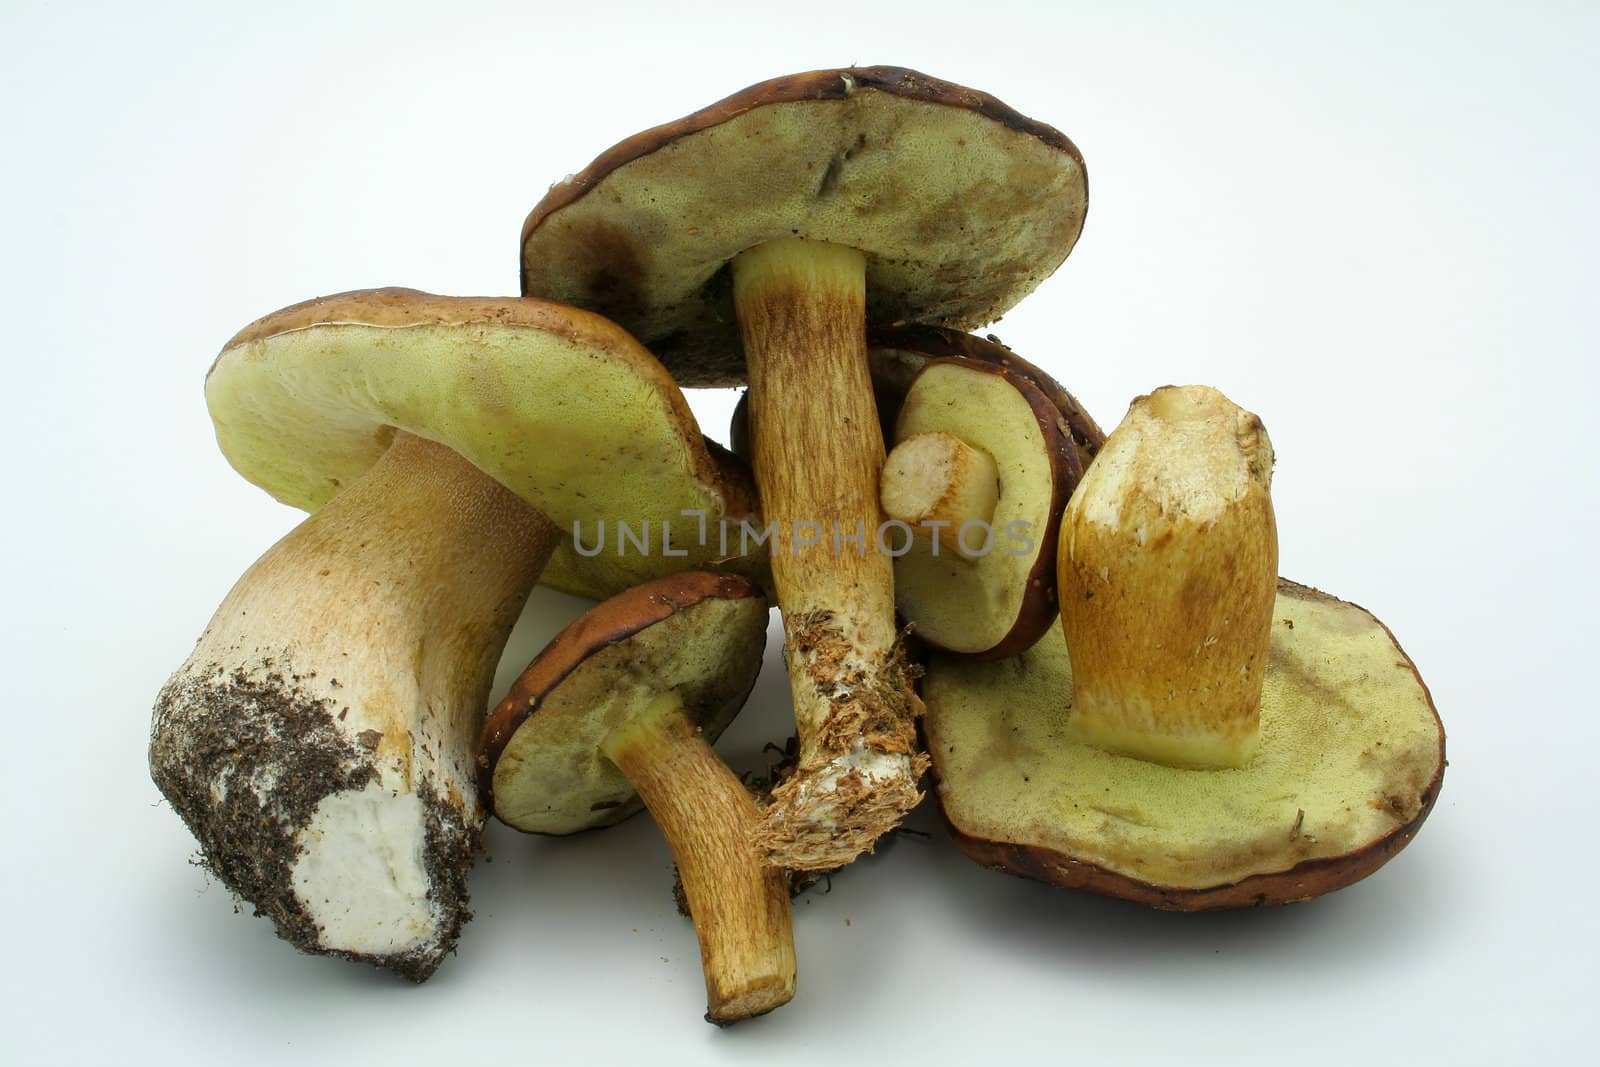 few mushrooms on white background by furzyk73